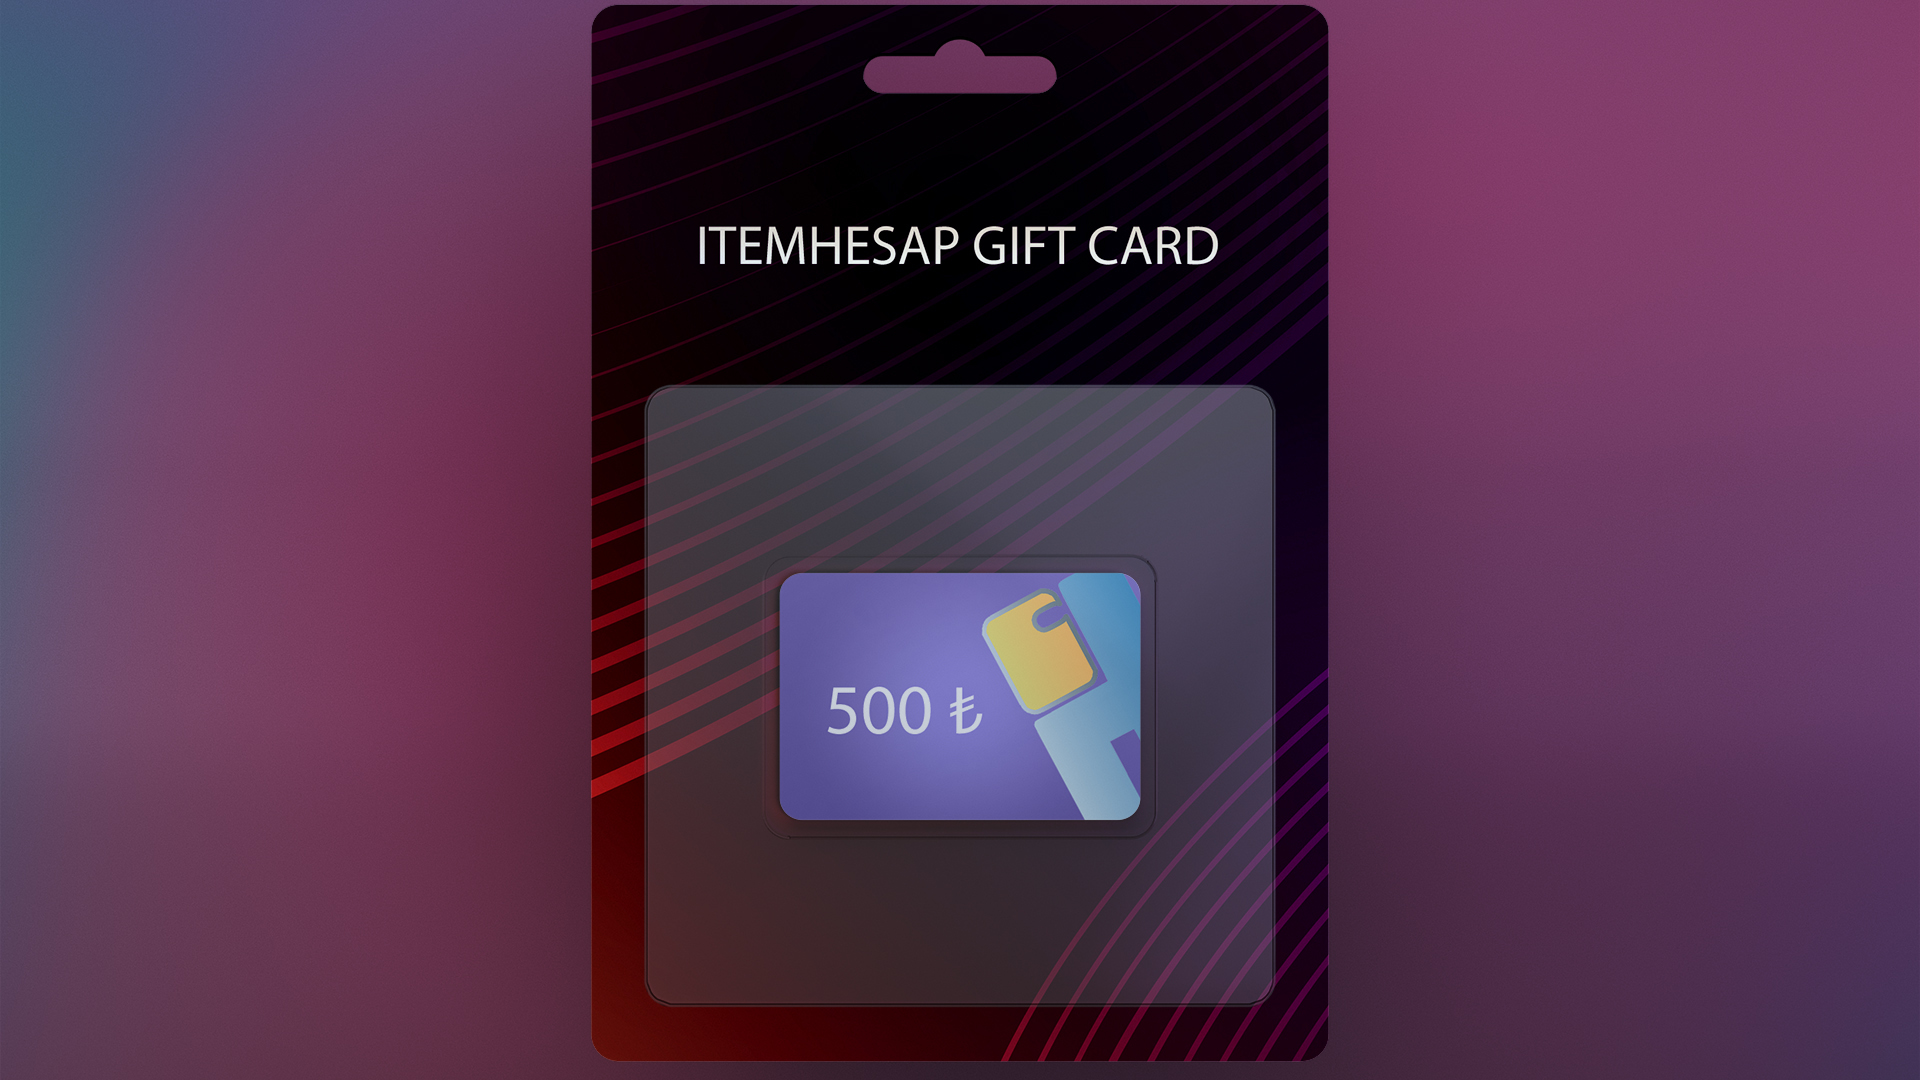 ItemHesap ₺500 Gift Card, $31.04